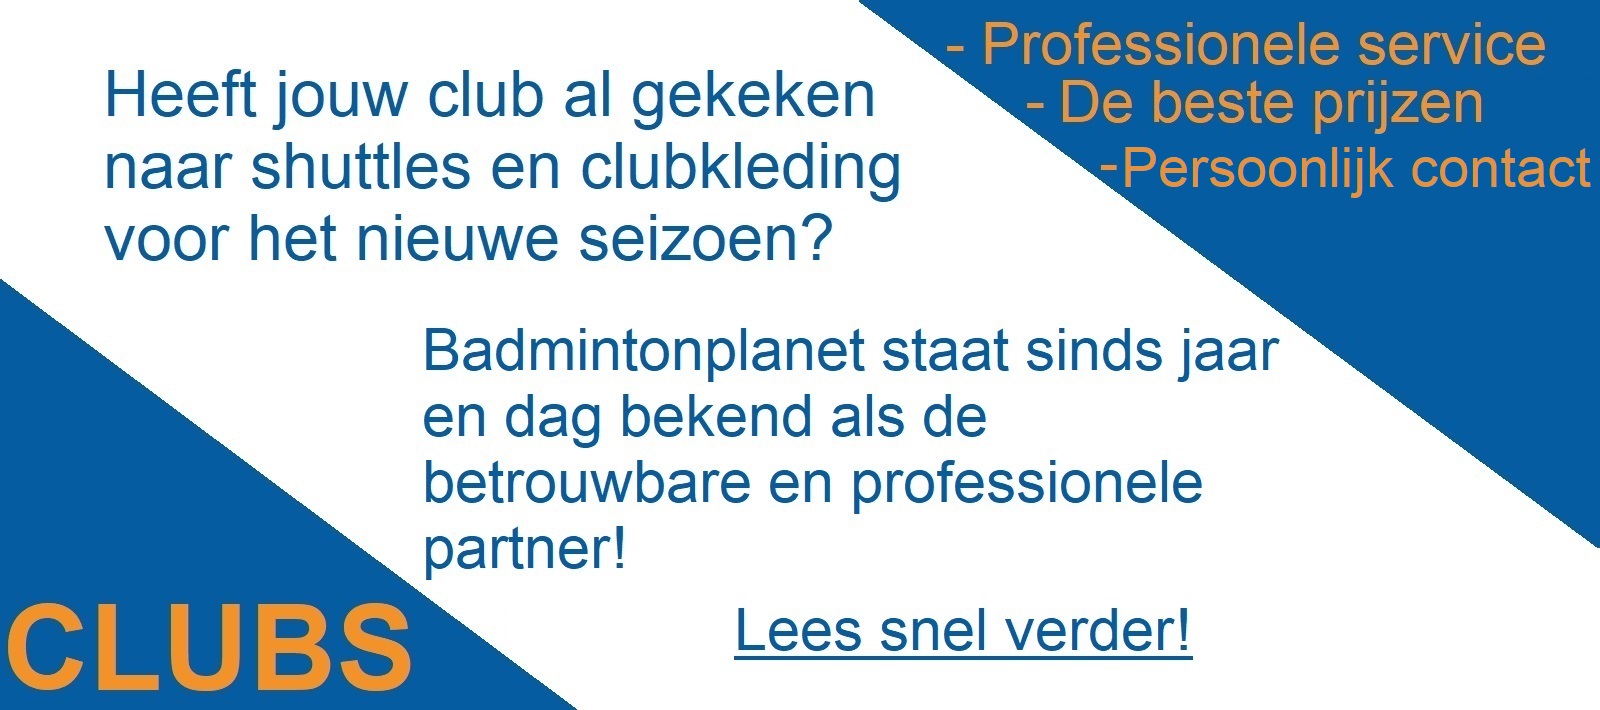 Clubs en Badmintonplanet